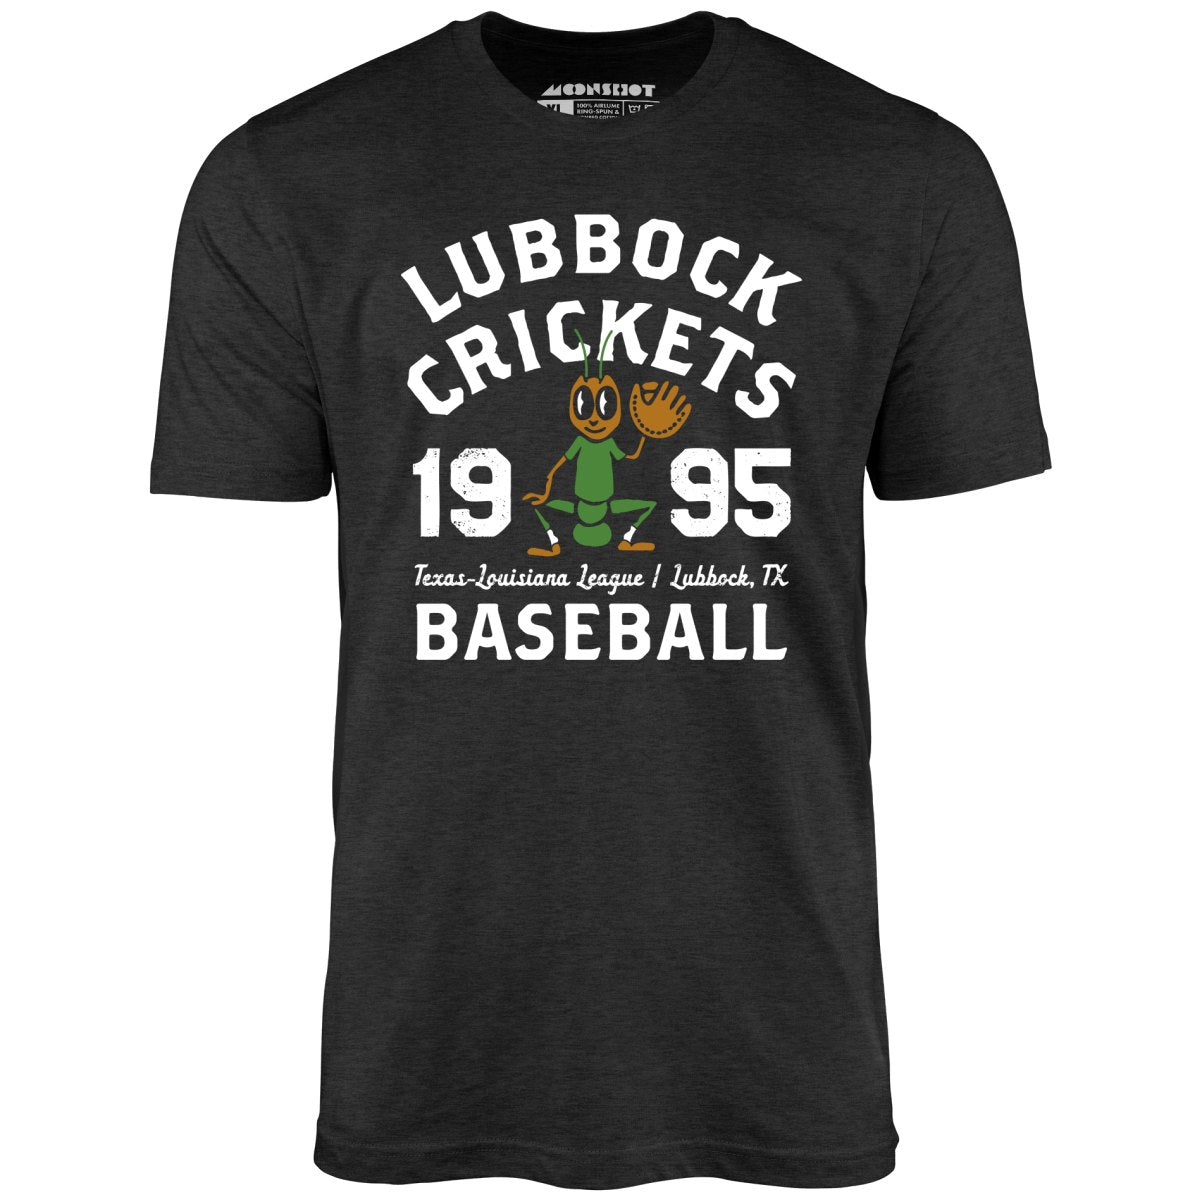 Lubbock Crickets - Texas - Vintage Defunct Baseball Teams - Unisex T-Shirt